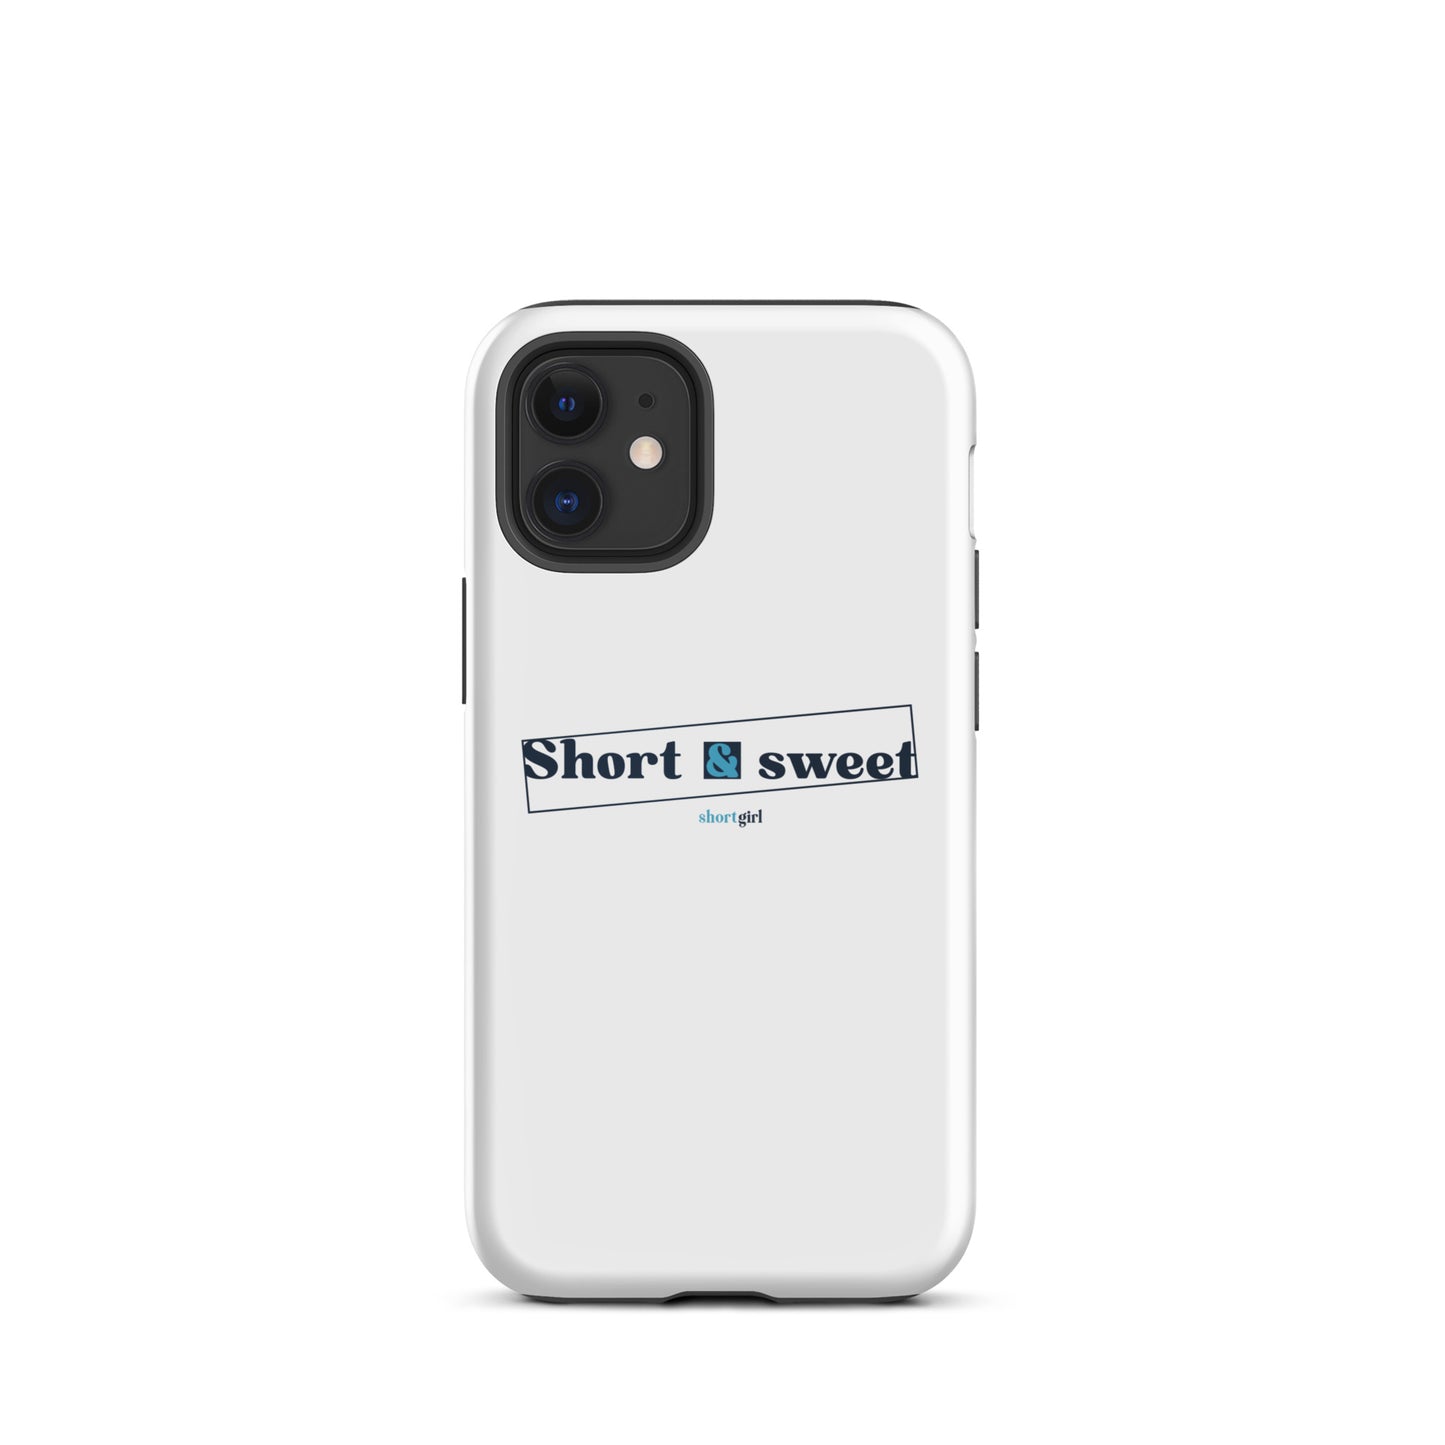 Tough iPhone case - Short & sweet